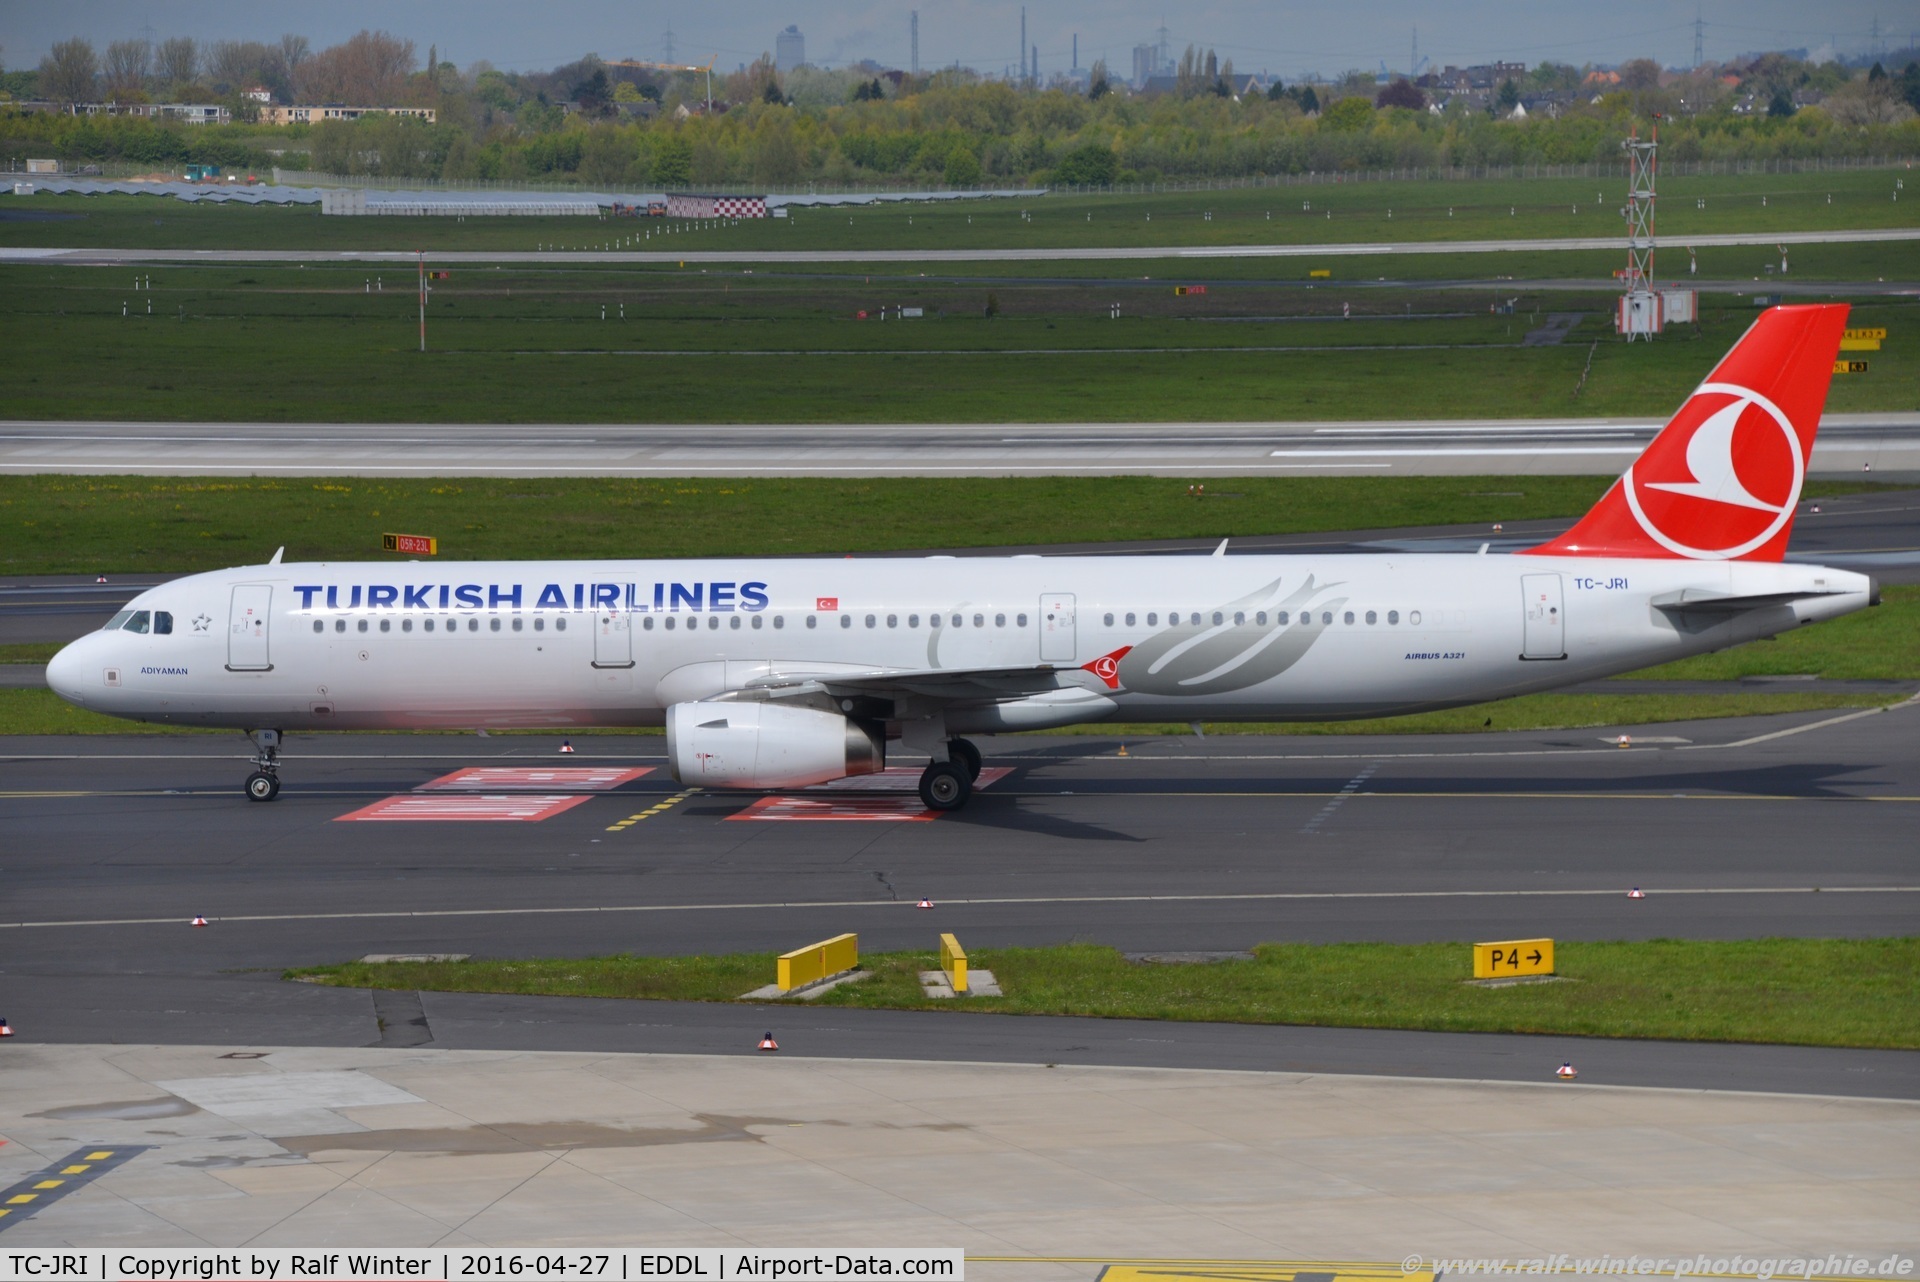 TC-JRI, 2008 Airbus A321-231 C/N 3405, Airbus A321-231 - TK THY Turkish Airlines 'Adiyaman' - 3405 - TC-JRI - 27.04.2016 - DUS